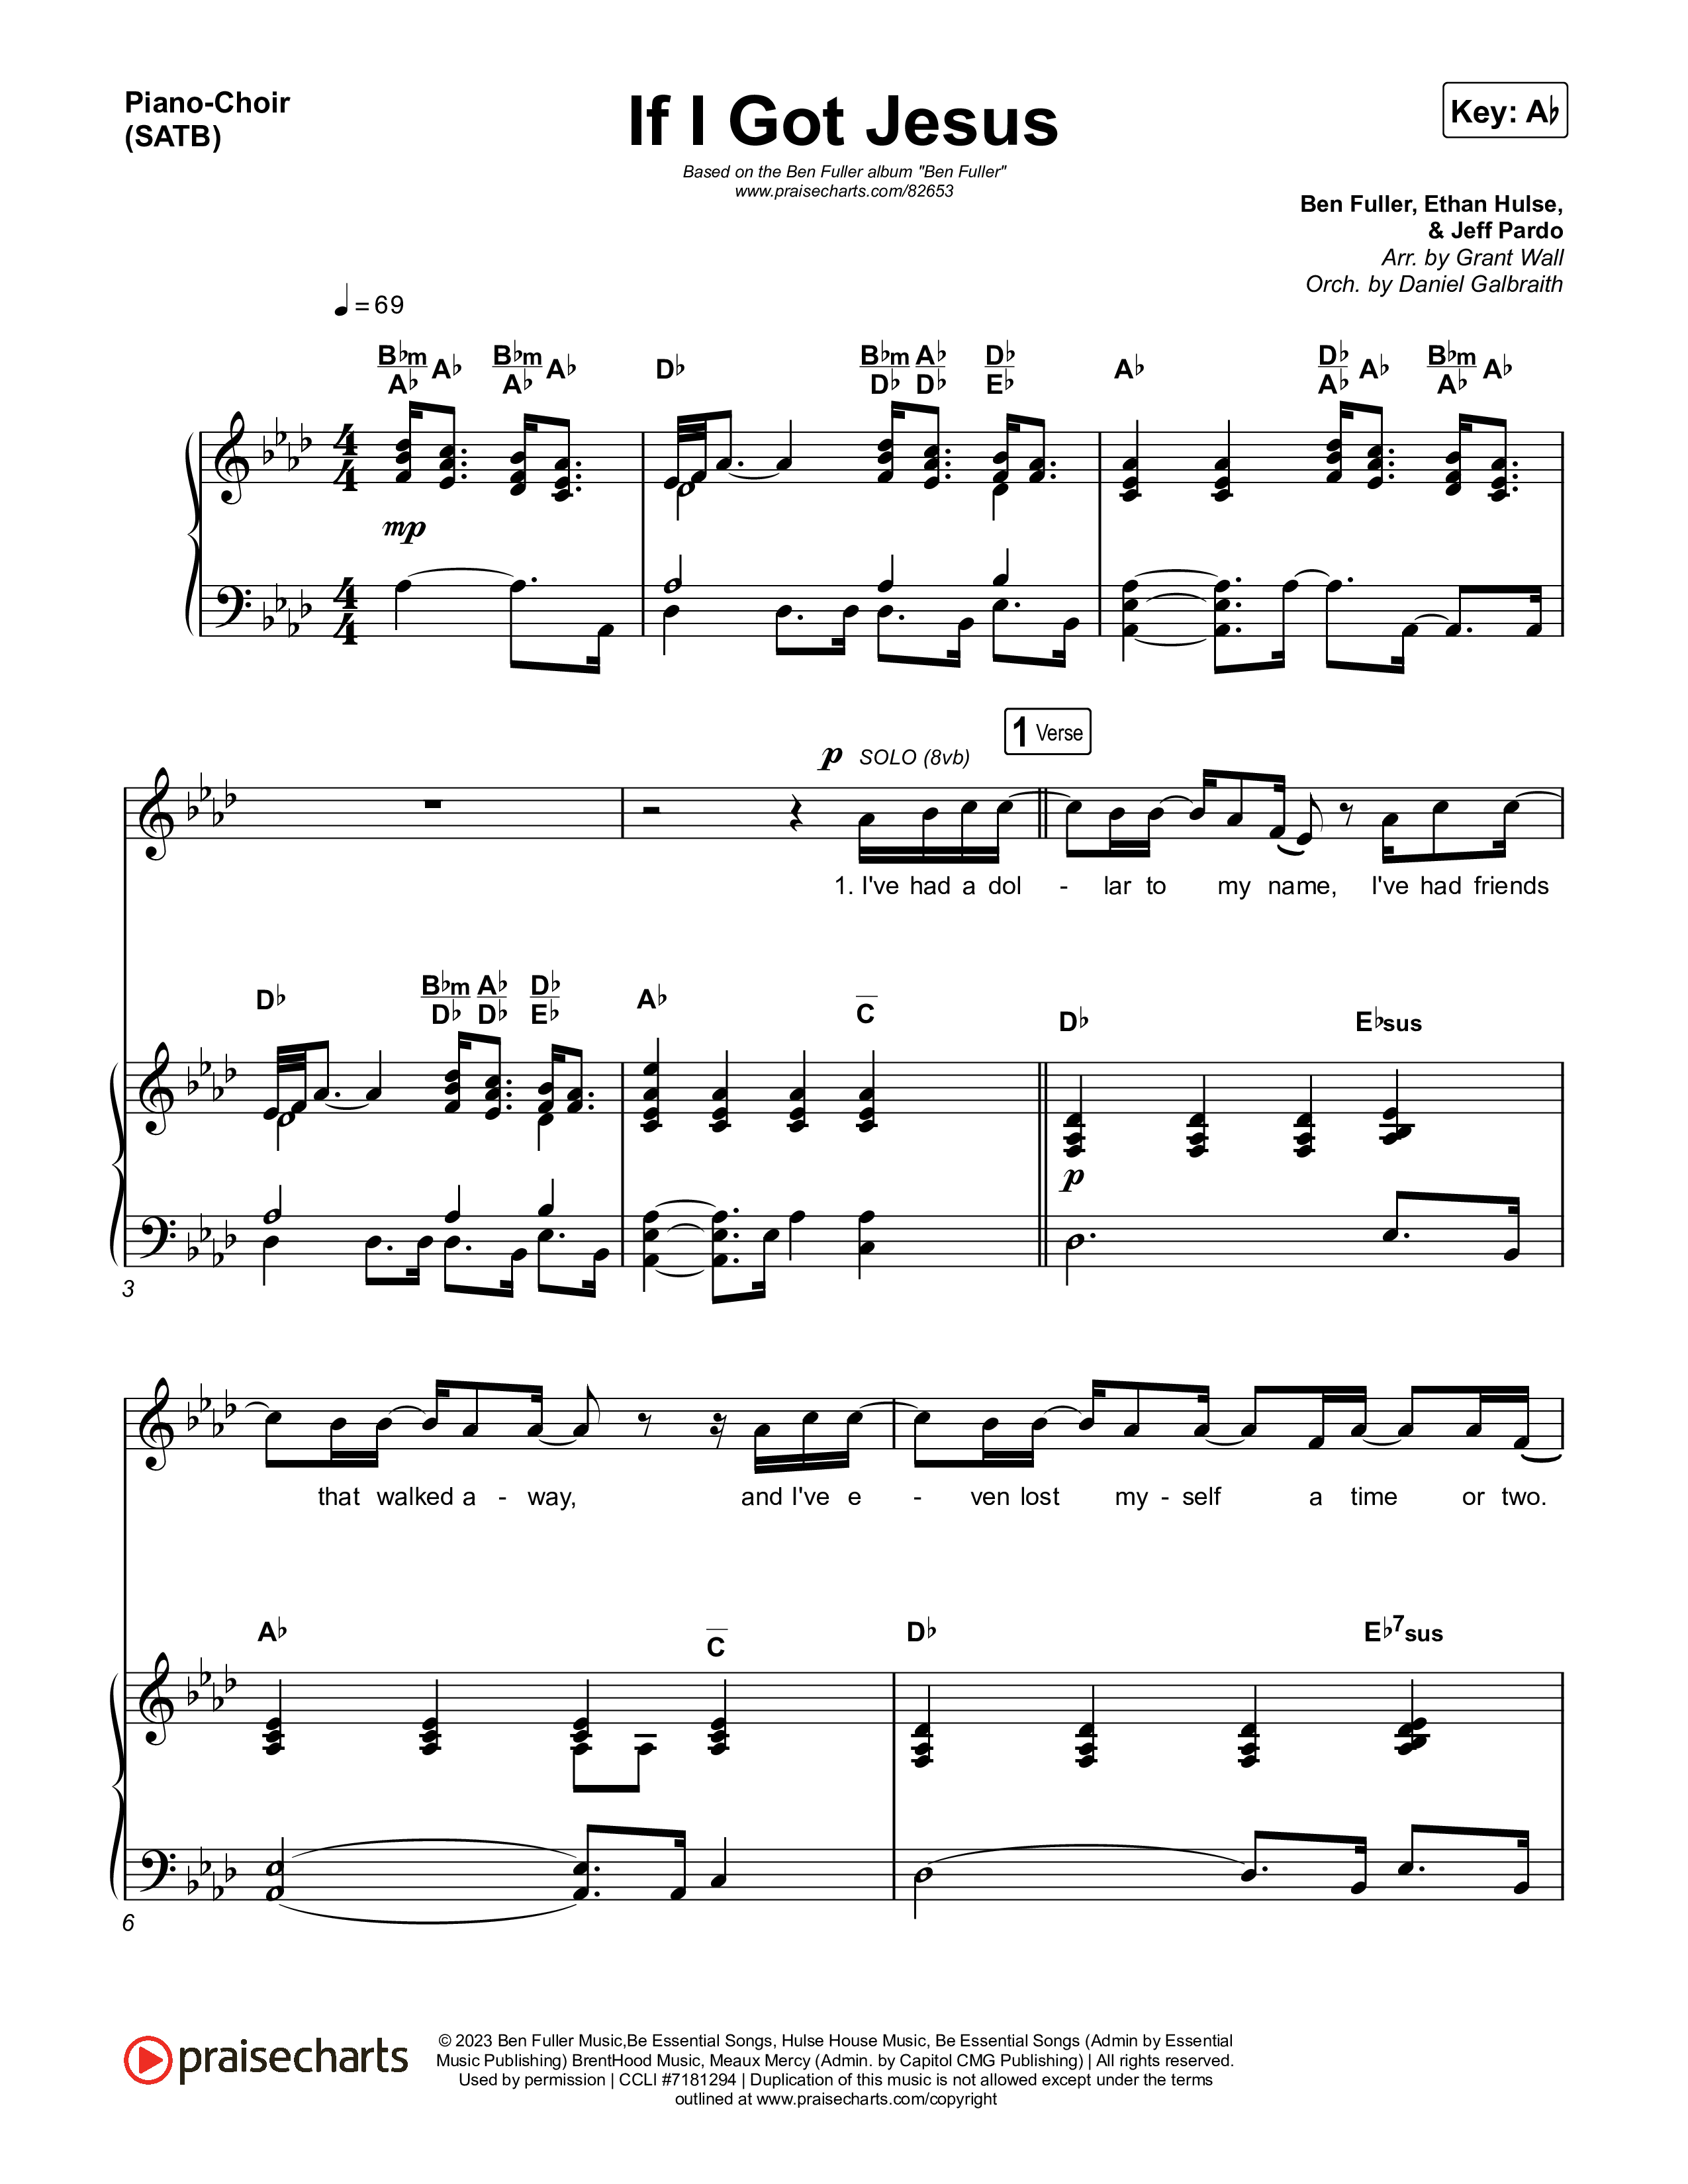 If I Got Jesus Piano/Vocal (SATB) (Ben Fuller)